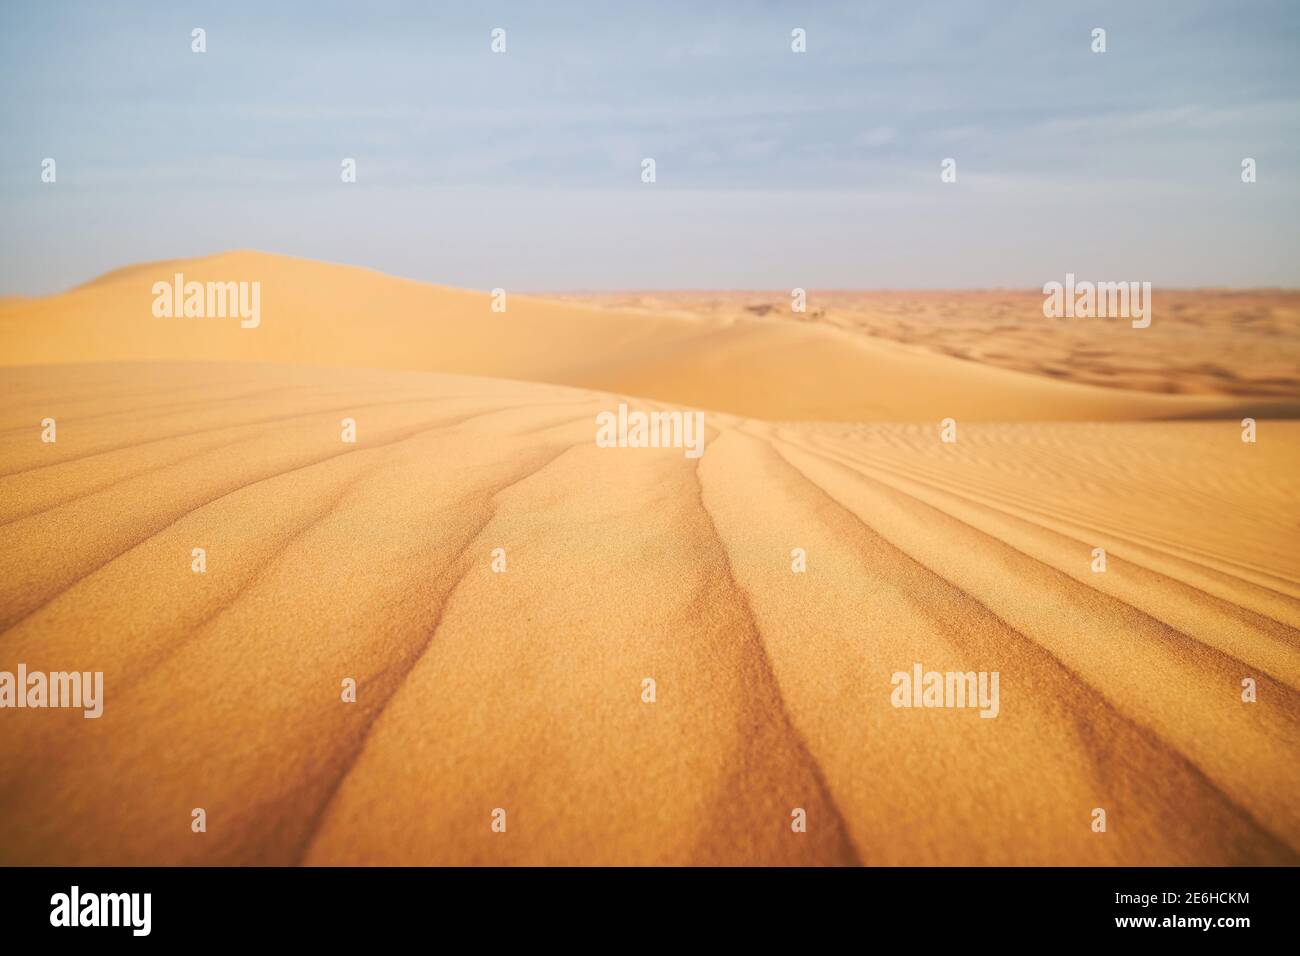 Selective focus on pattern of sand dunes in desert landscape. Abu Dhabi, United Arab Emirates Stock Photo